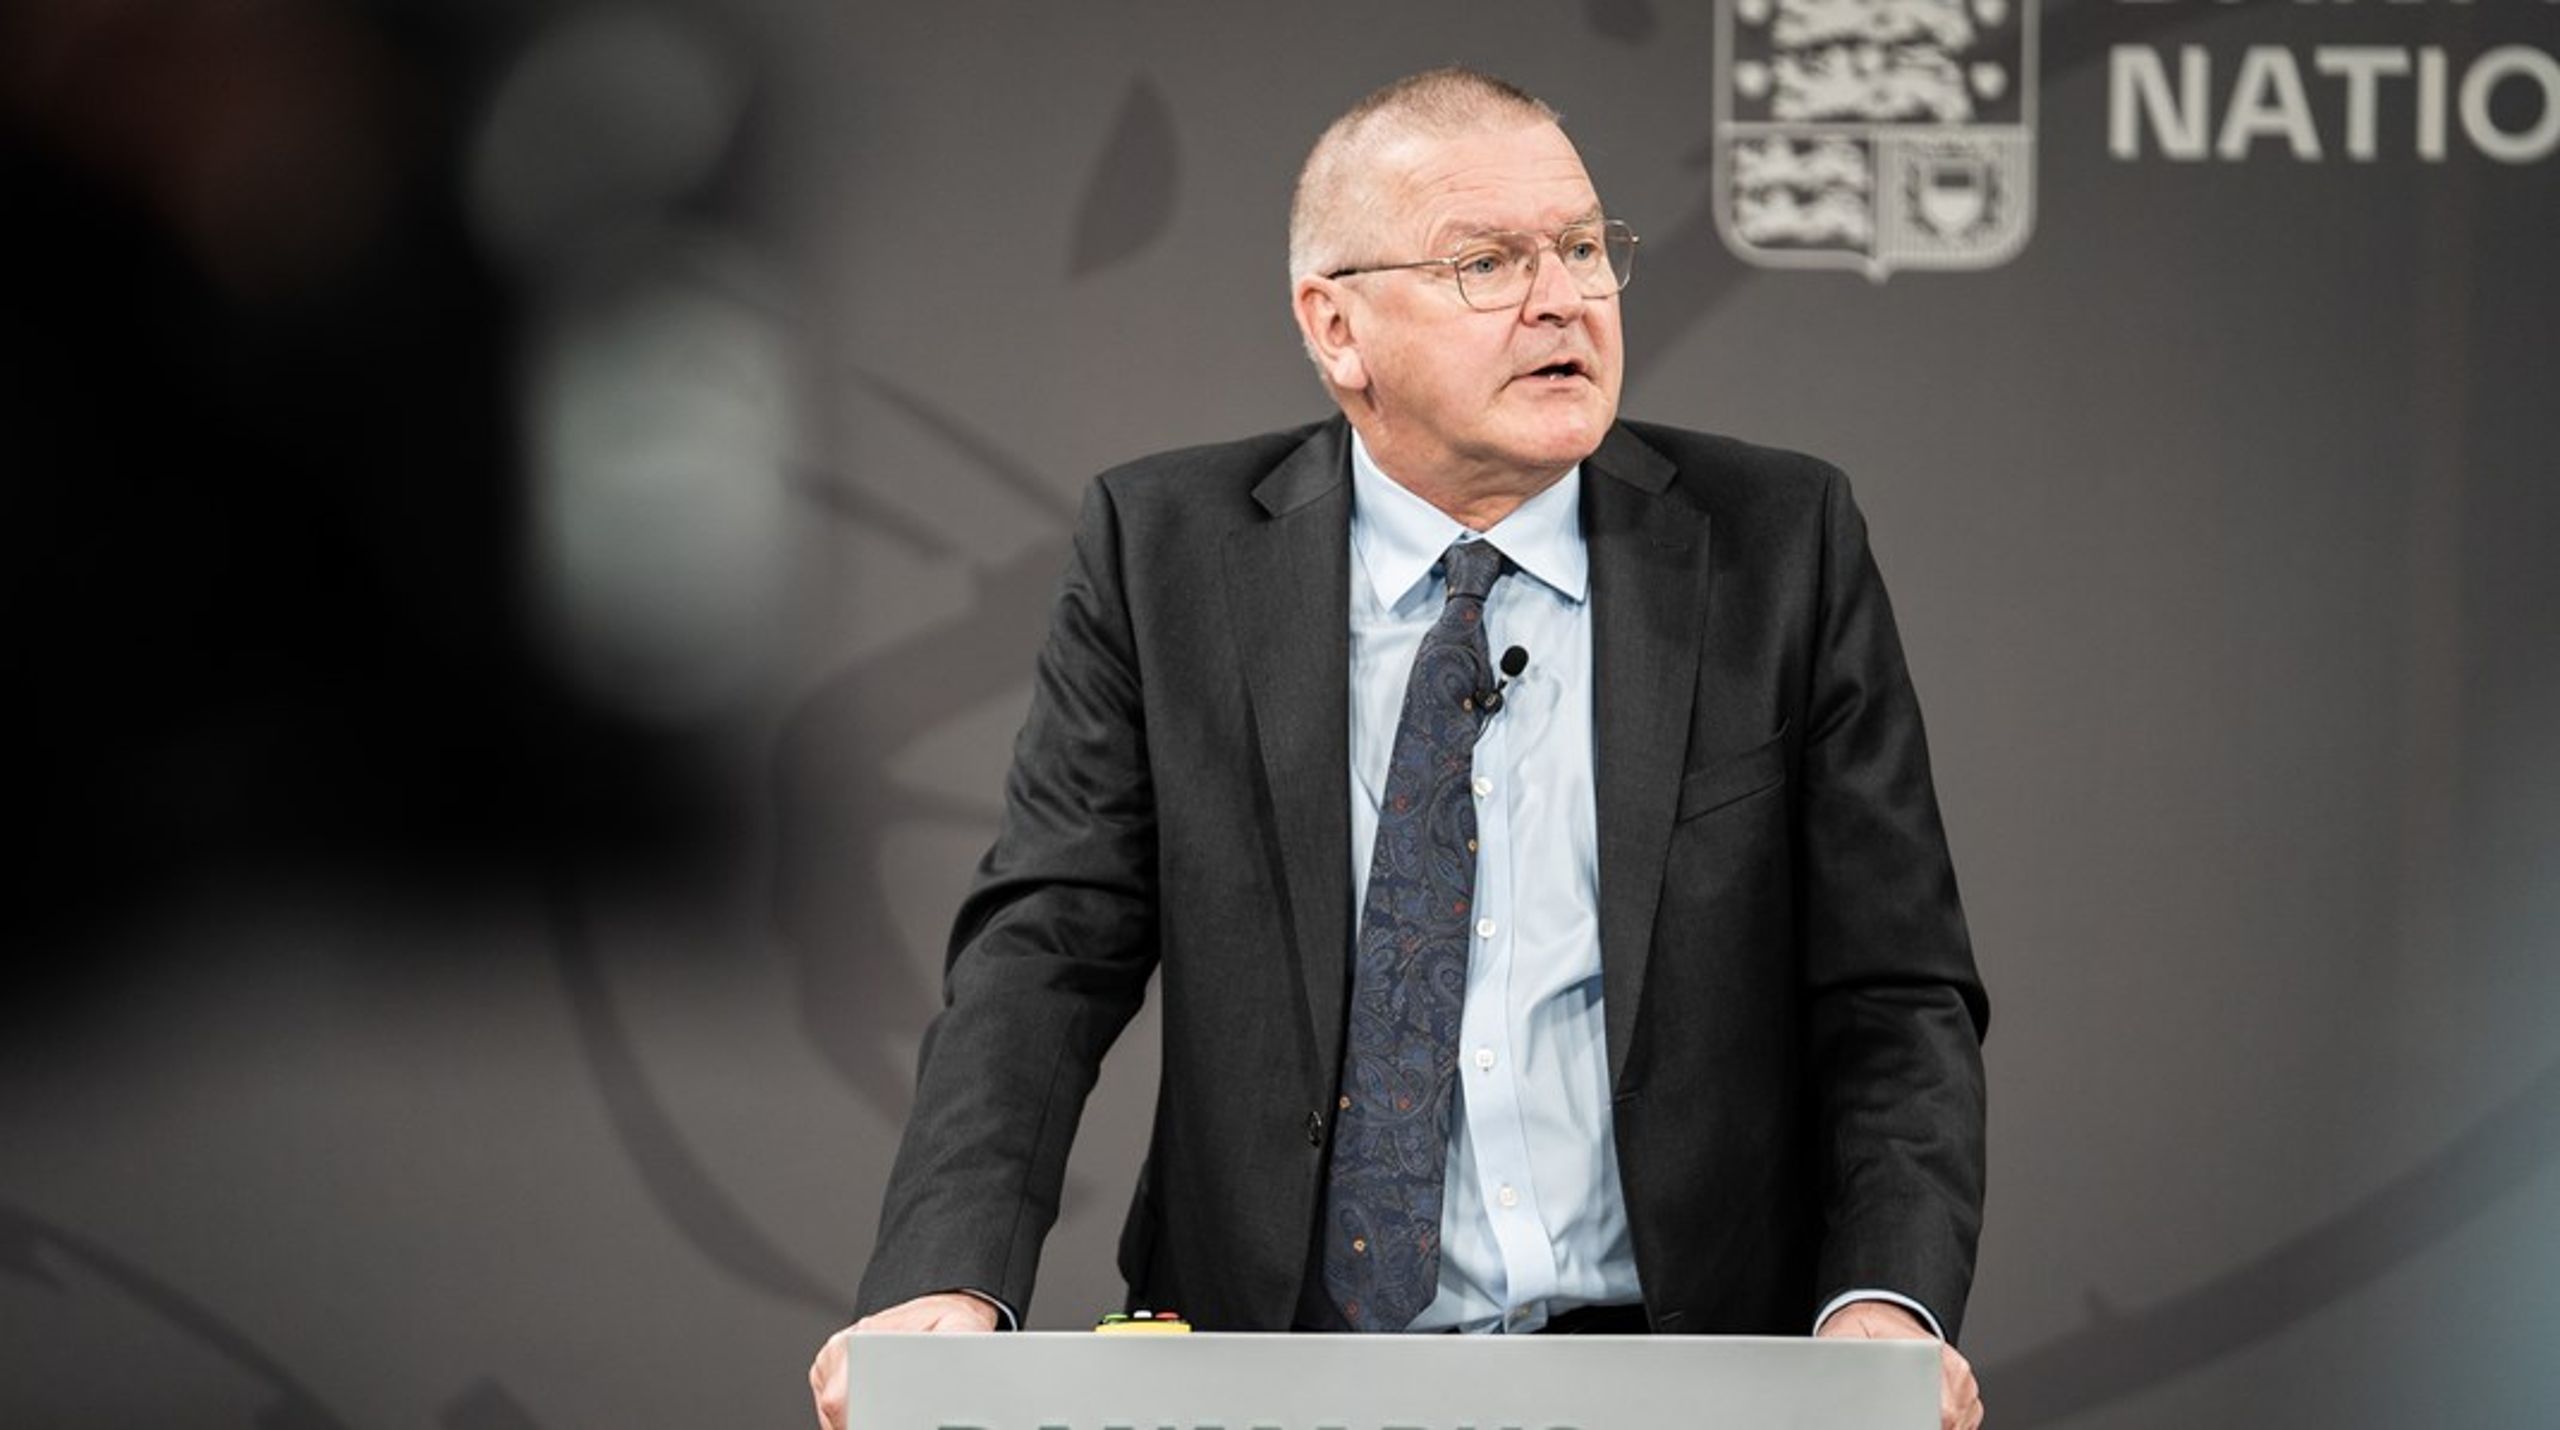 Nationalbank-direktør Lars Rohde er formand for Det Systemiske Risikoråd.&nbsp;